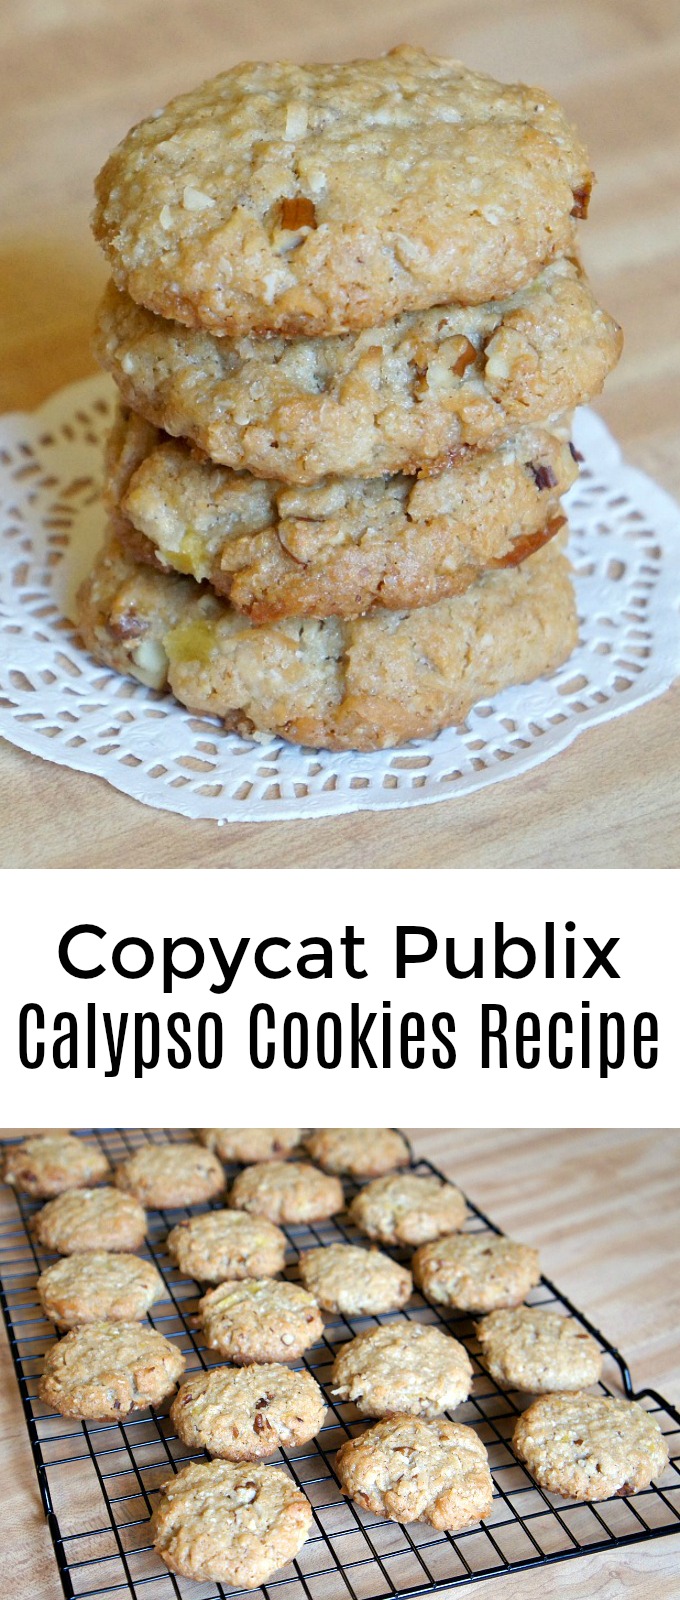 Copycat Publix Calypso Cookies Recipe